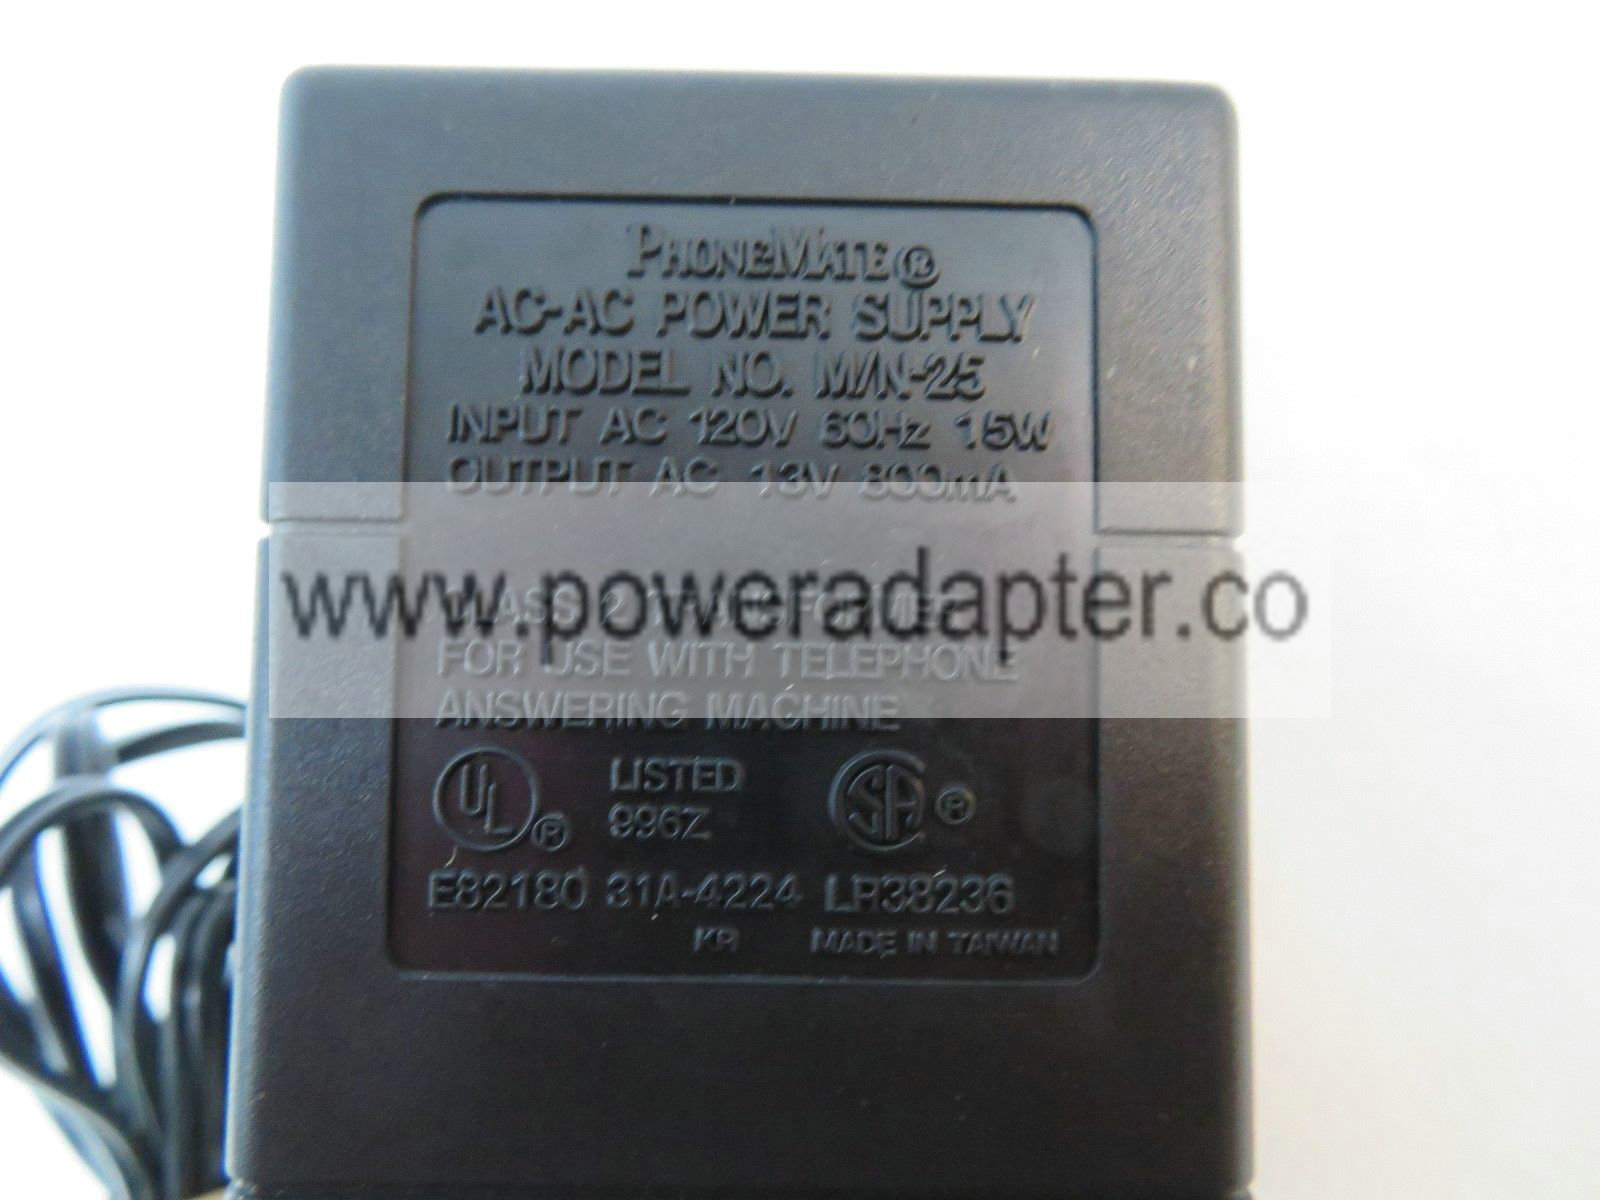 PhoneMate M/N-25 AC Adapter Power Supply Class 2 Transformer 13VAC 800mA Brand: PhoneMate Model no: M/N-25 MPN: